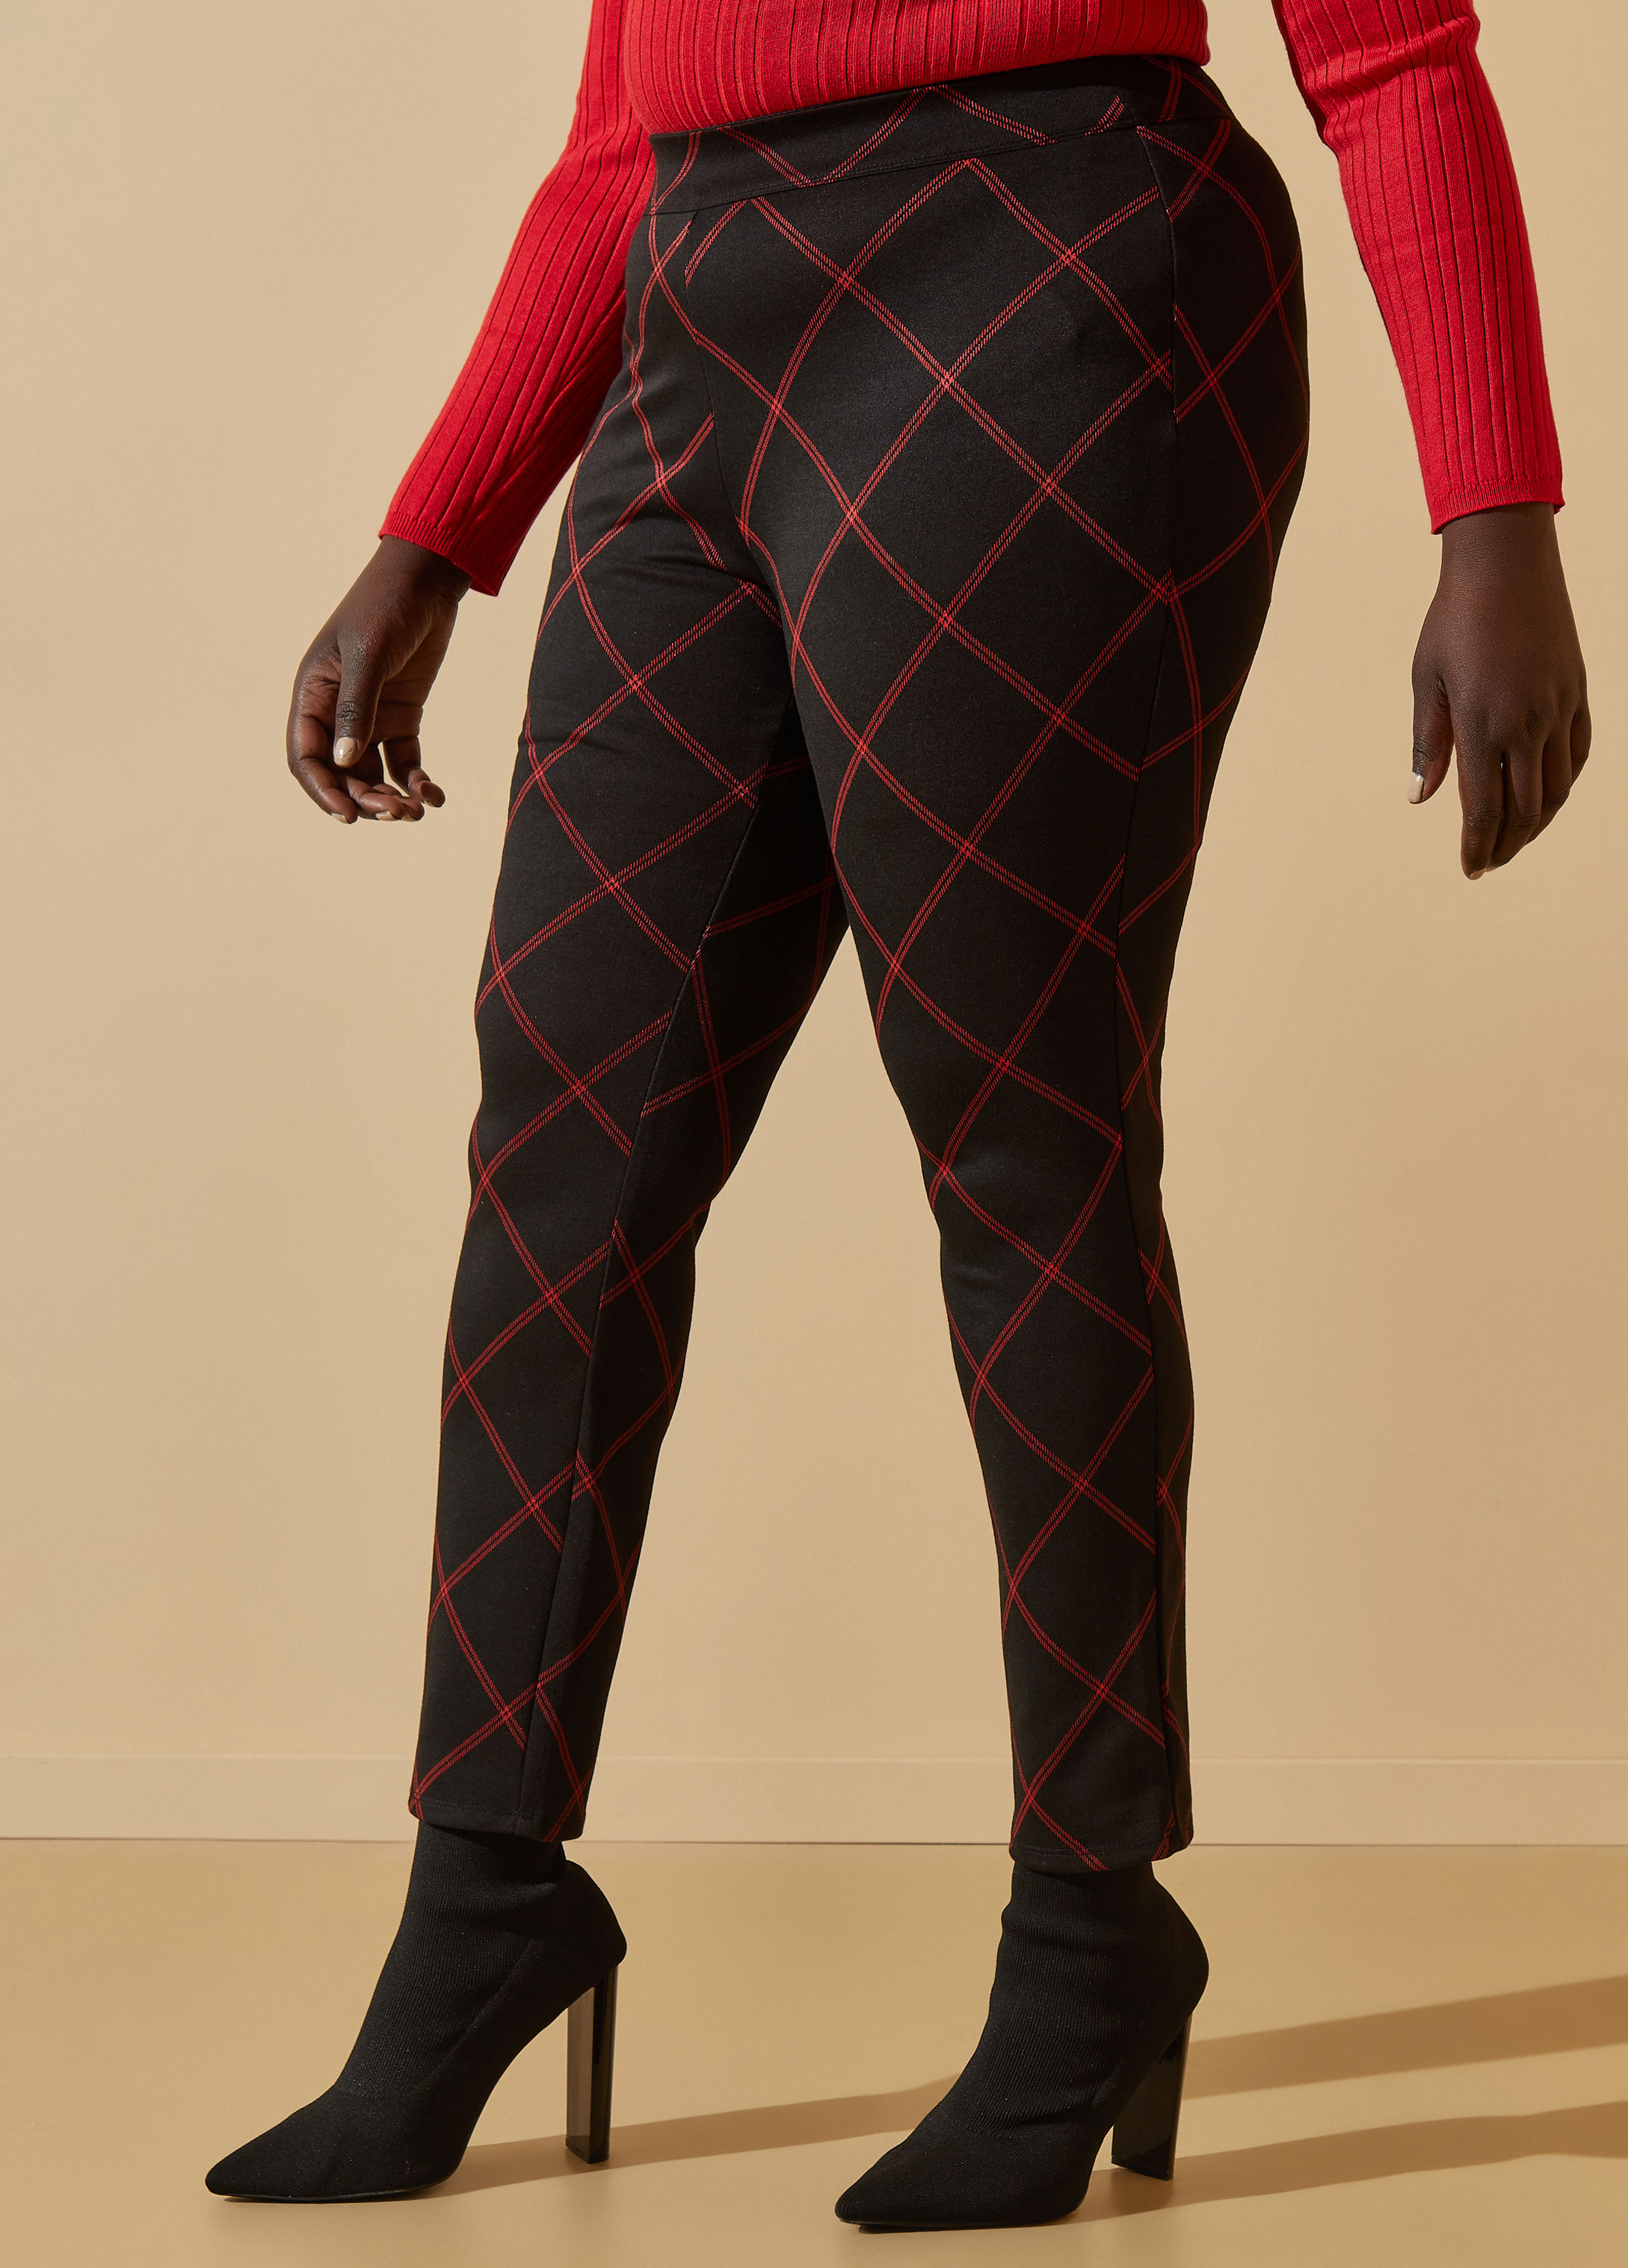 Women Leggings Grid Print Exercise Fitness Leggins Elasticity Plaid Push Up  Legging Female Trousers Plus Size Pants (Color : Black White Grid, Size 